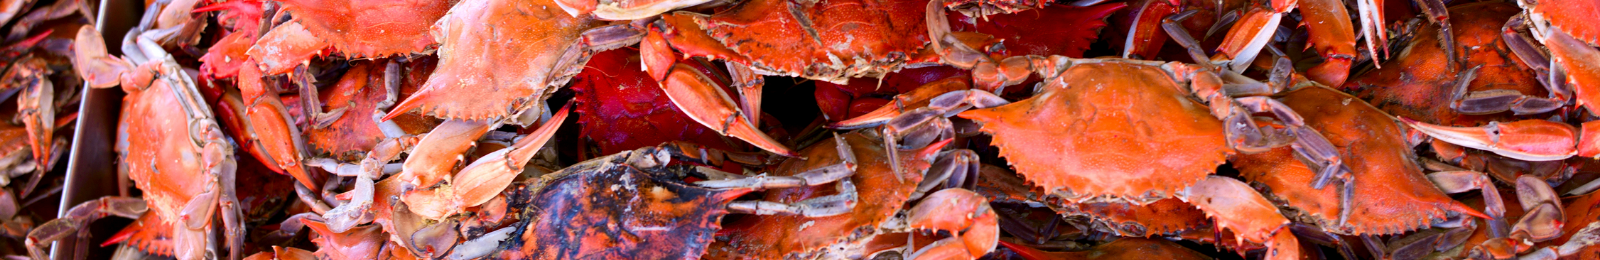 Battle of the Crustaceans: Lobsters vs. Crabs